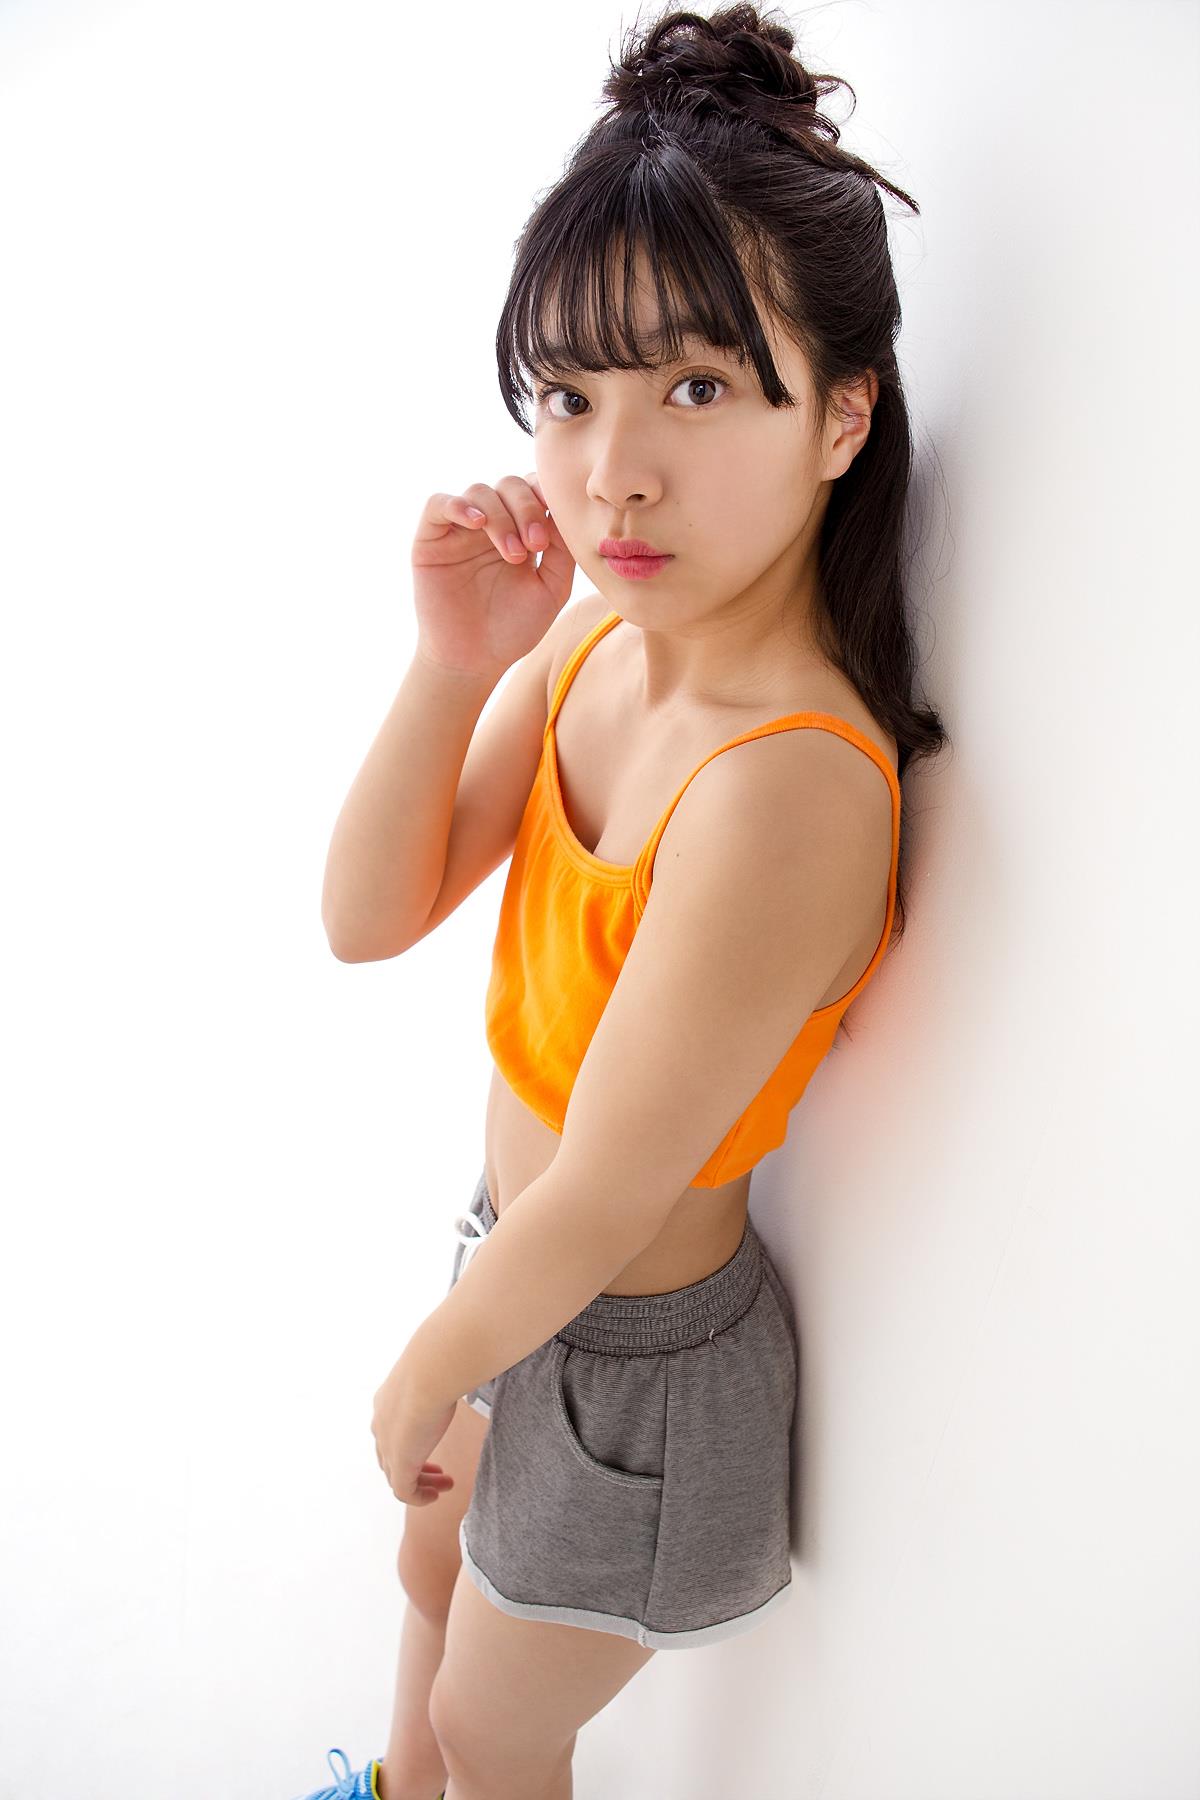 Minisuka.tv Saria Natsume 夏目咲莉愛 Premium Gallery 02 - 24.jpg